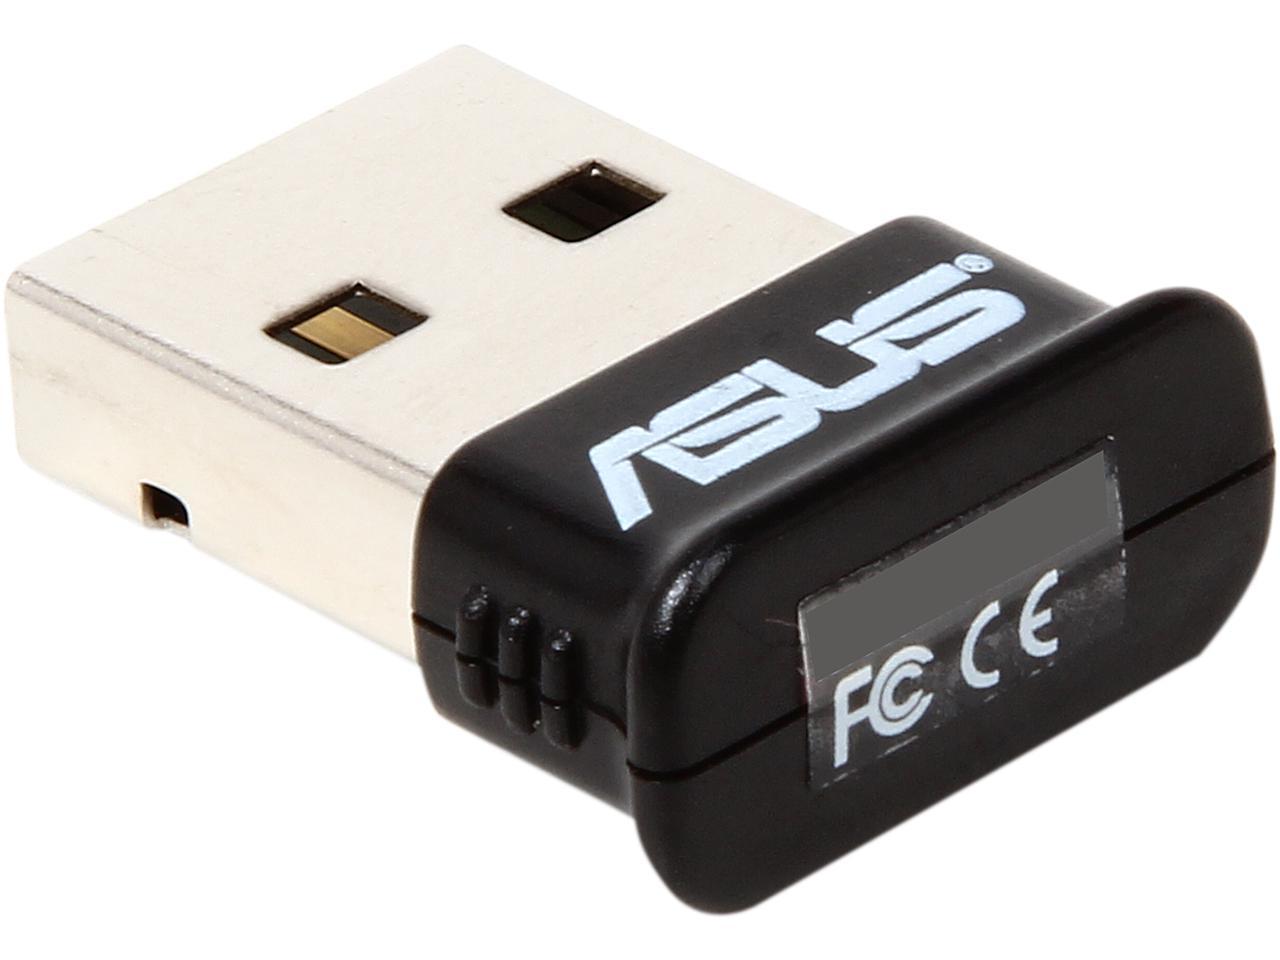 Asus Certified USB-BT400/US USB 2.0 Bluetooth Newegg.com